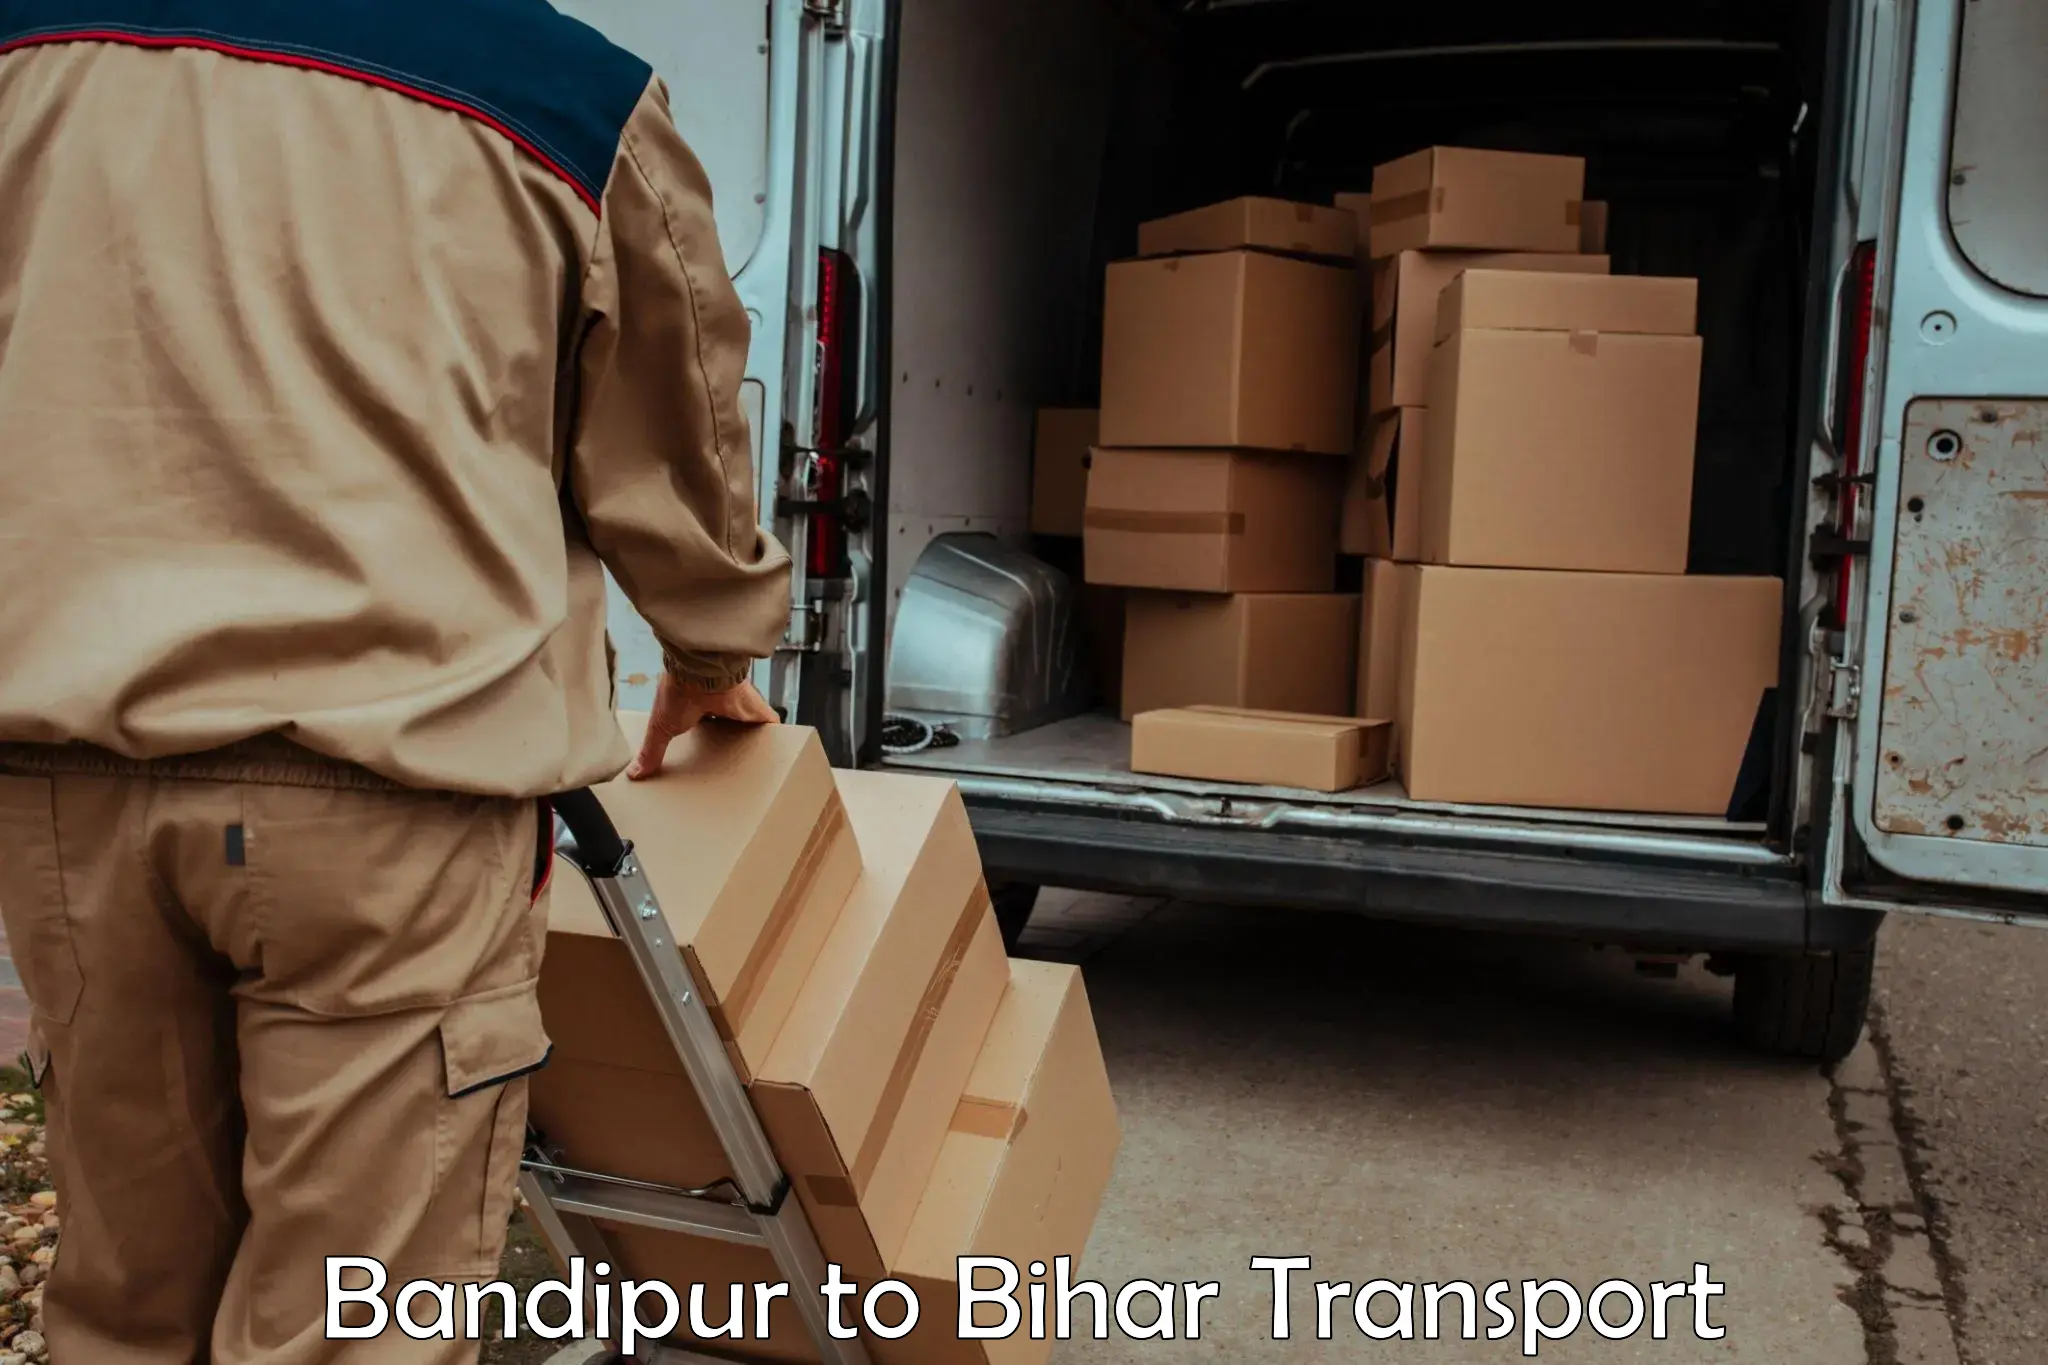 Furniture transport service in Bandipur to Bankipore